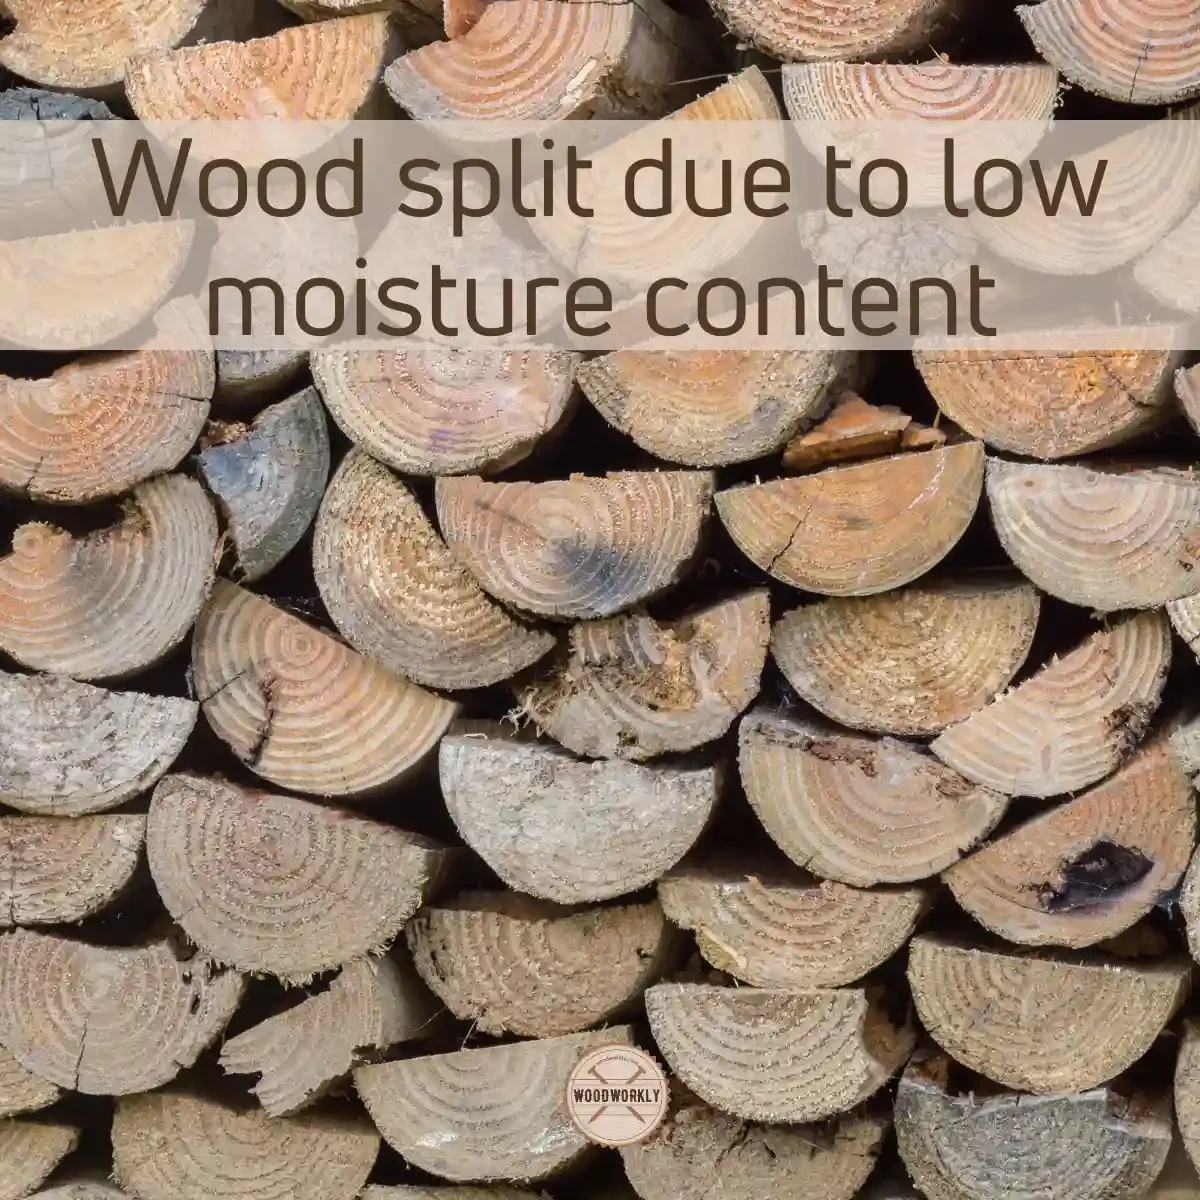 Wood split due to low moisture content